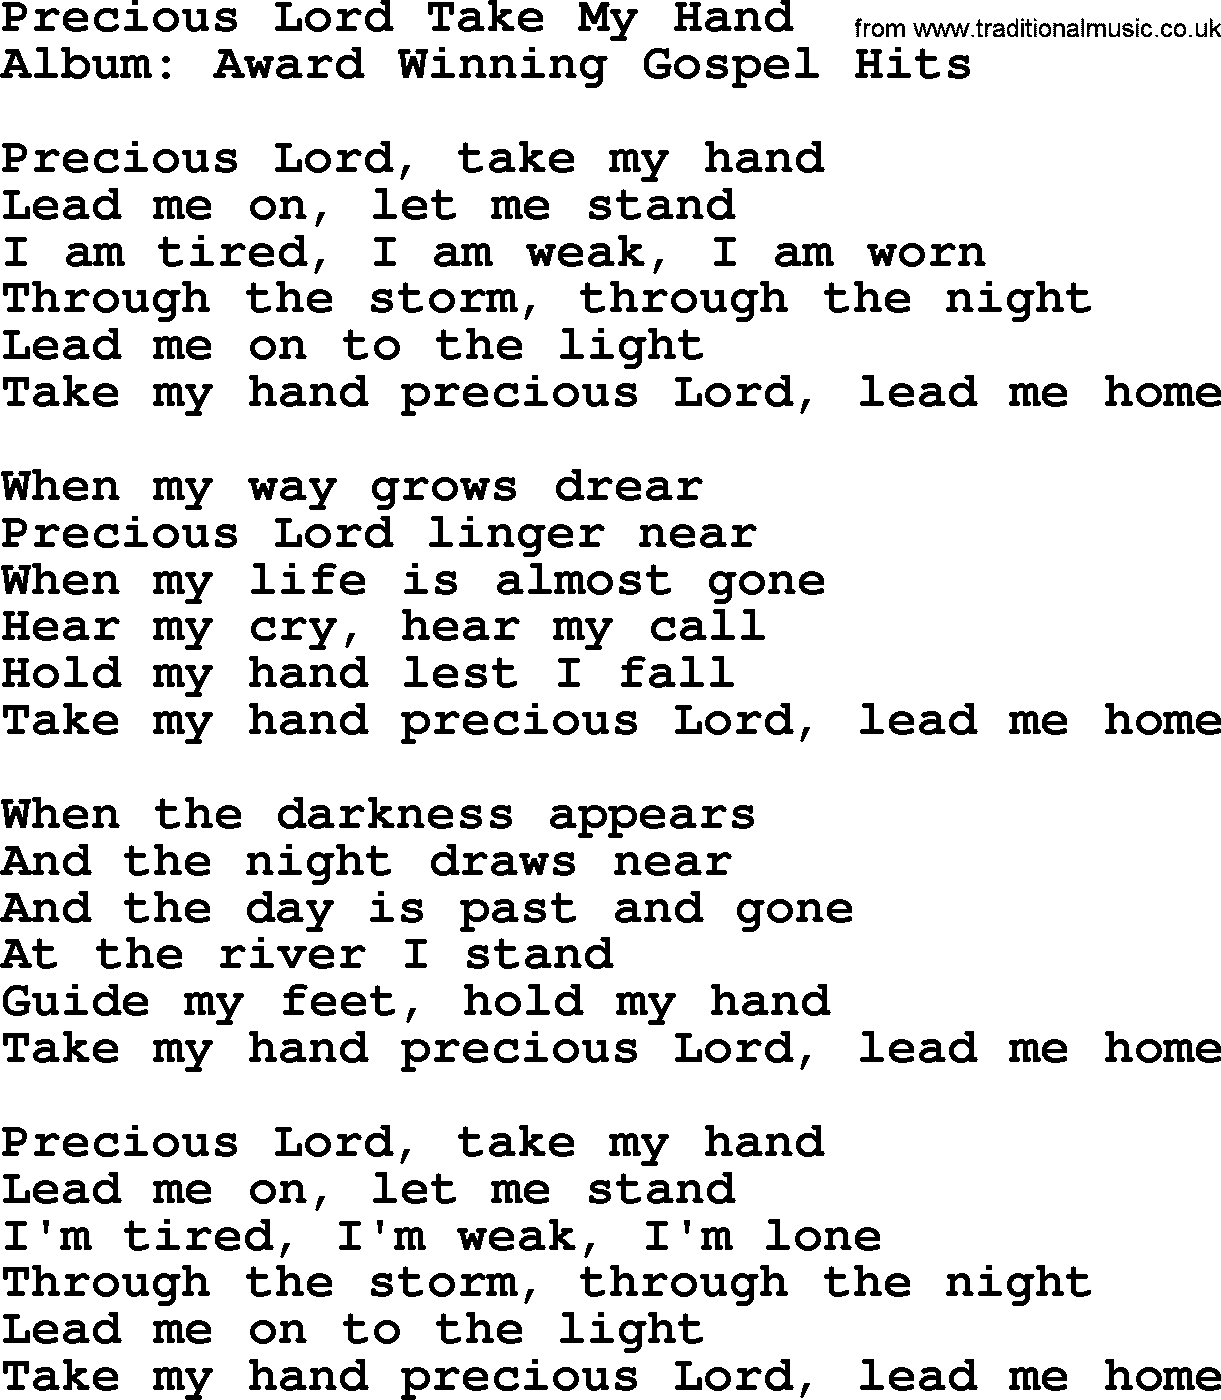 Merle Haggard song: Precious Lord Take My Hand, lyrics.